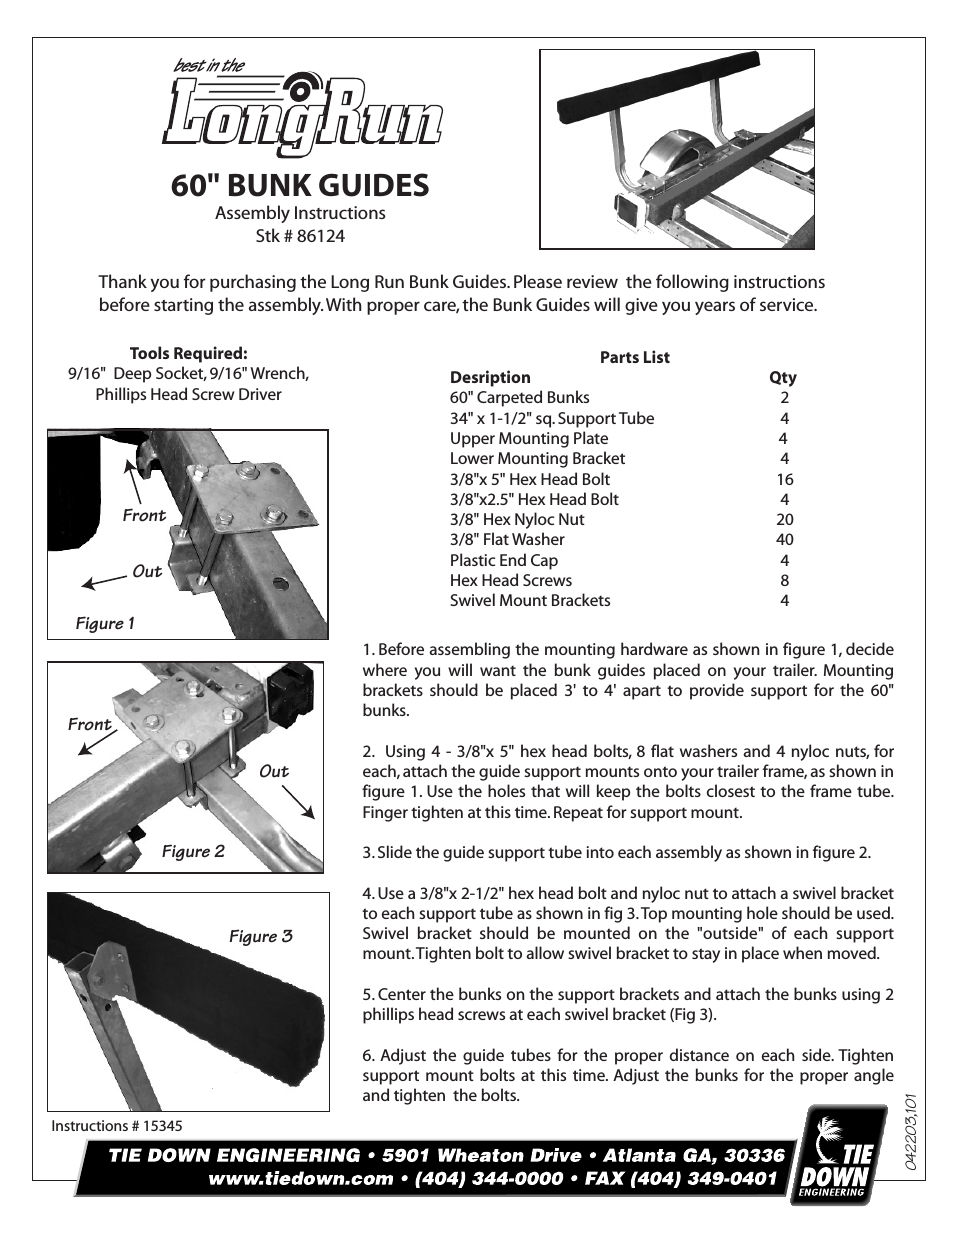 Bunk Guides 60